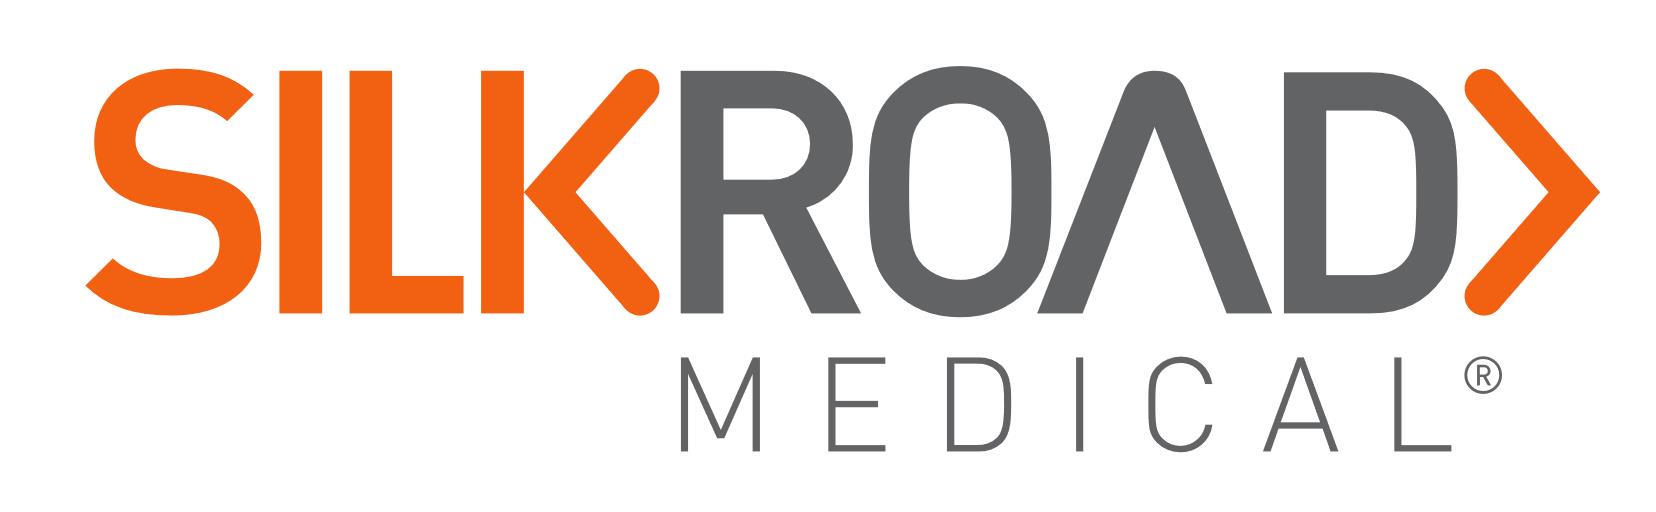 A grey and orange logo

Description automatically generated